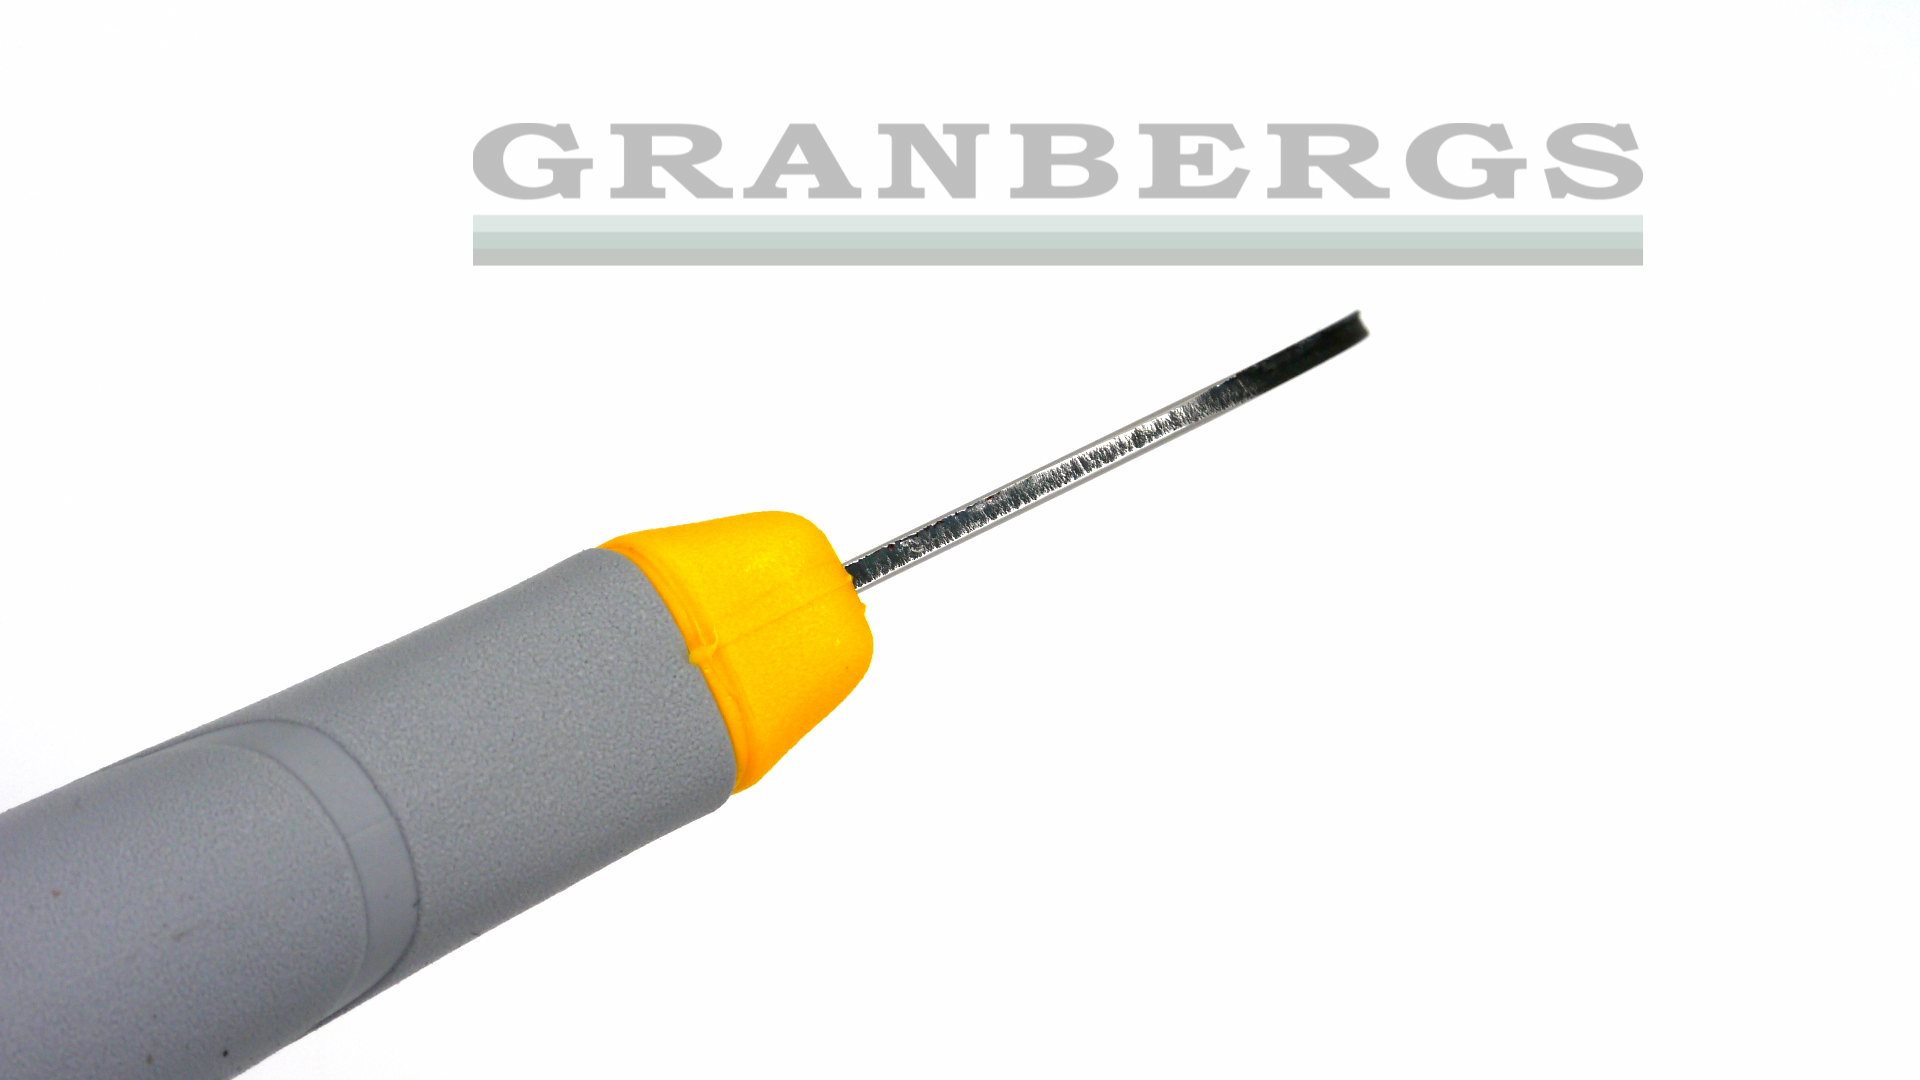 https://granbergs.com.au/getattachment/Products/Knives-Outdoors/Morakniv-Craftline-HighQ-Electrician-Knife/4P1130787Morakniv-Electricians-Knife-1920p-Watermark.jpg.aspx